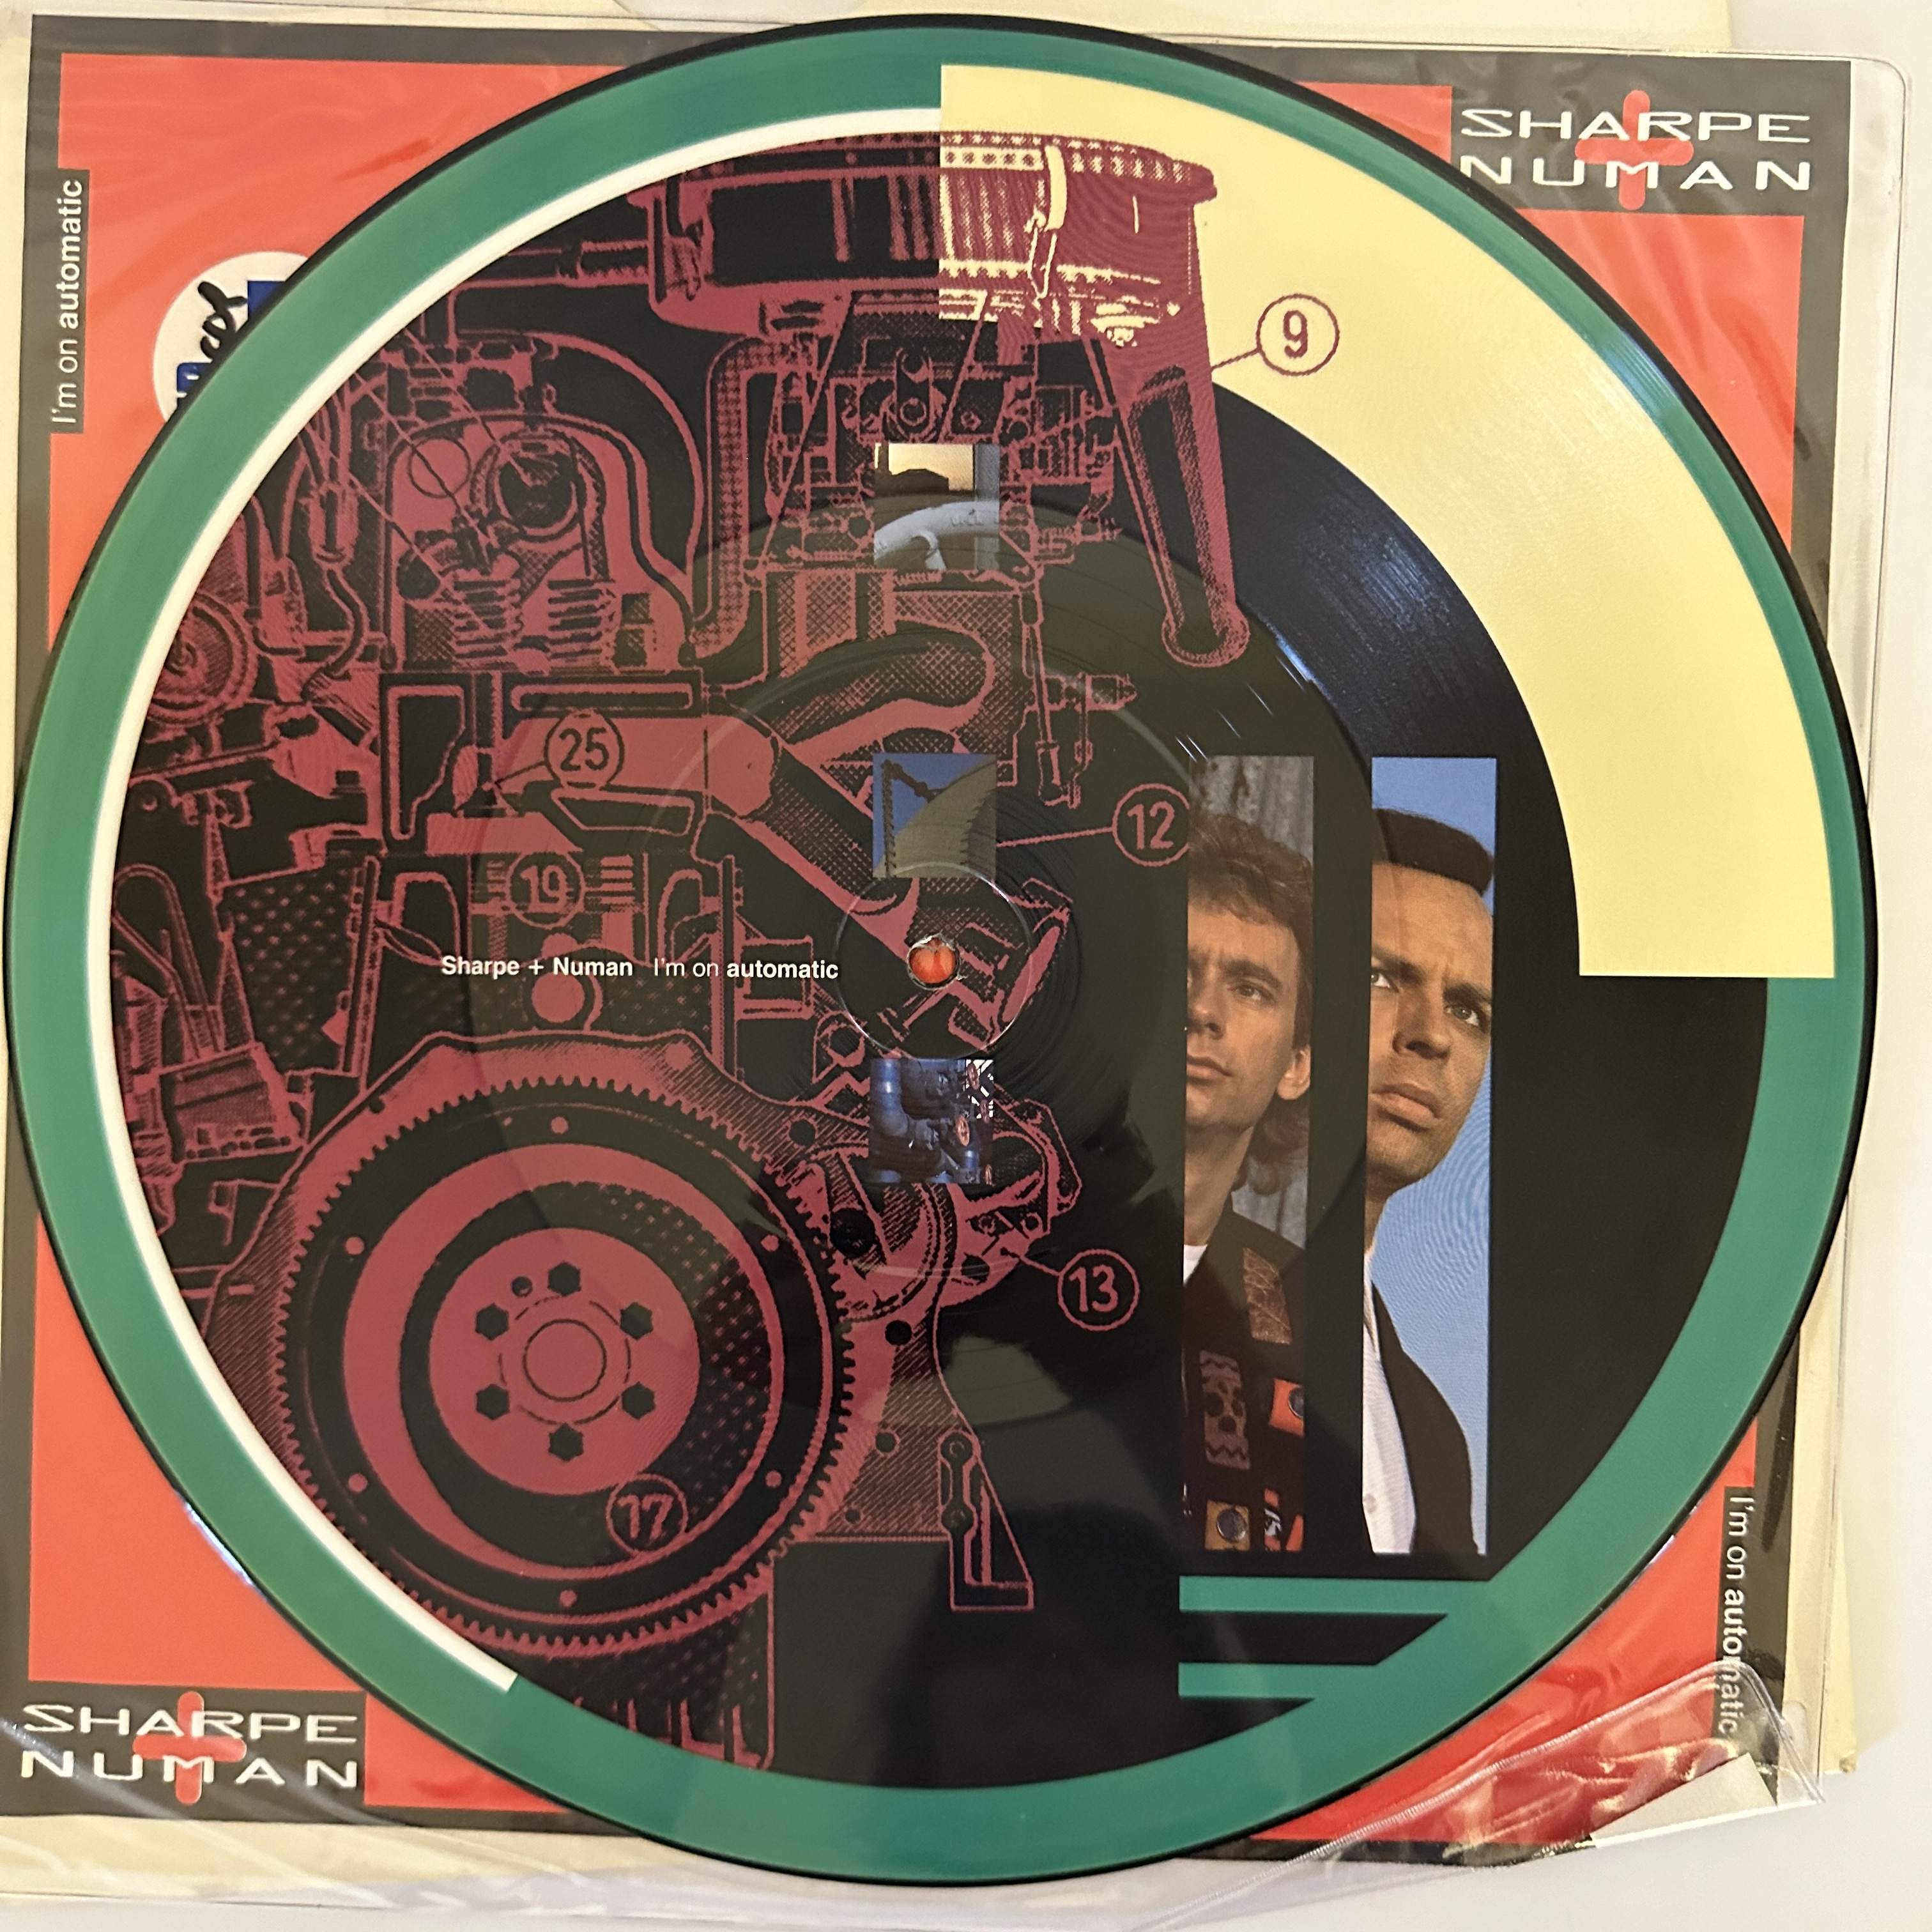 A Sharpe + Numan - I'm on automatic vinyl - Image 4 of 5